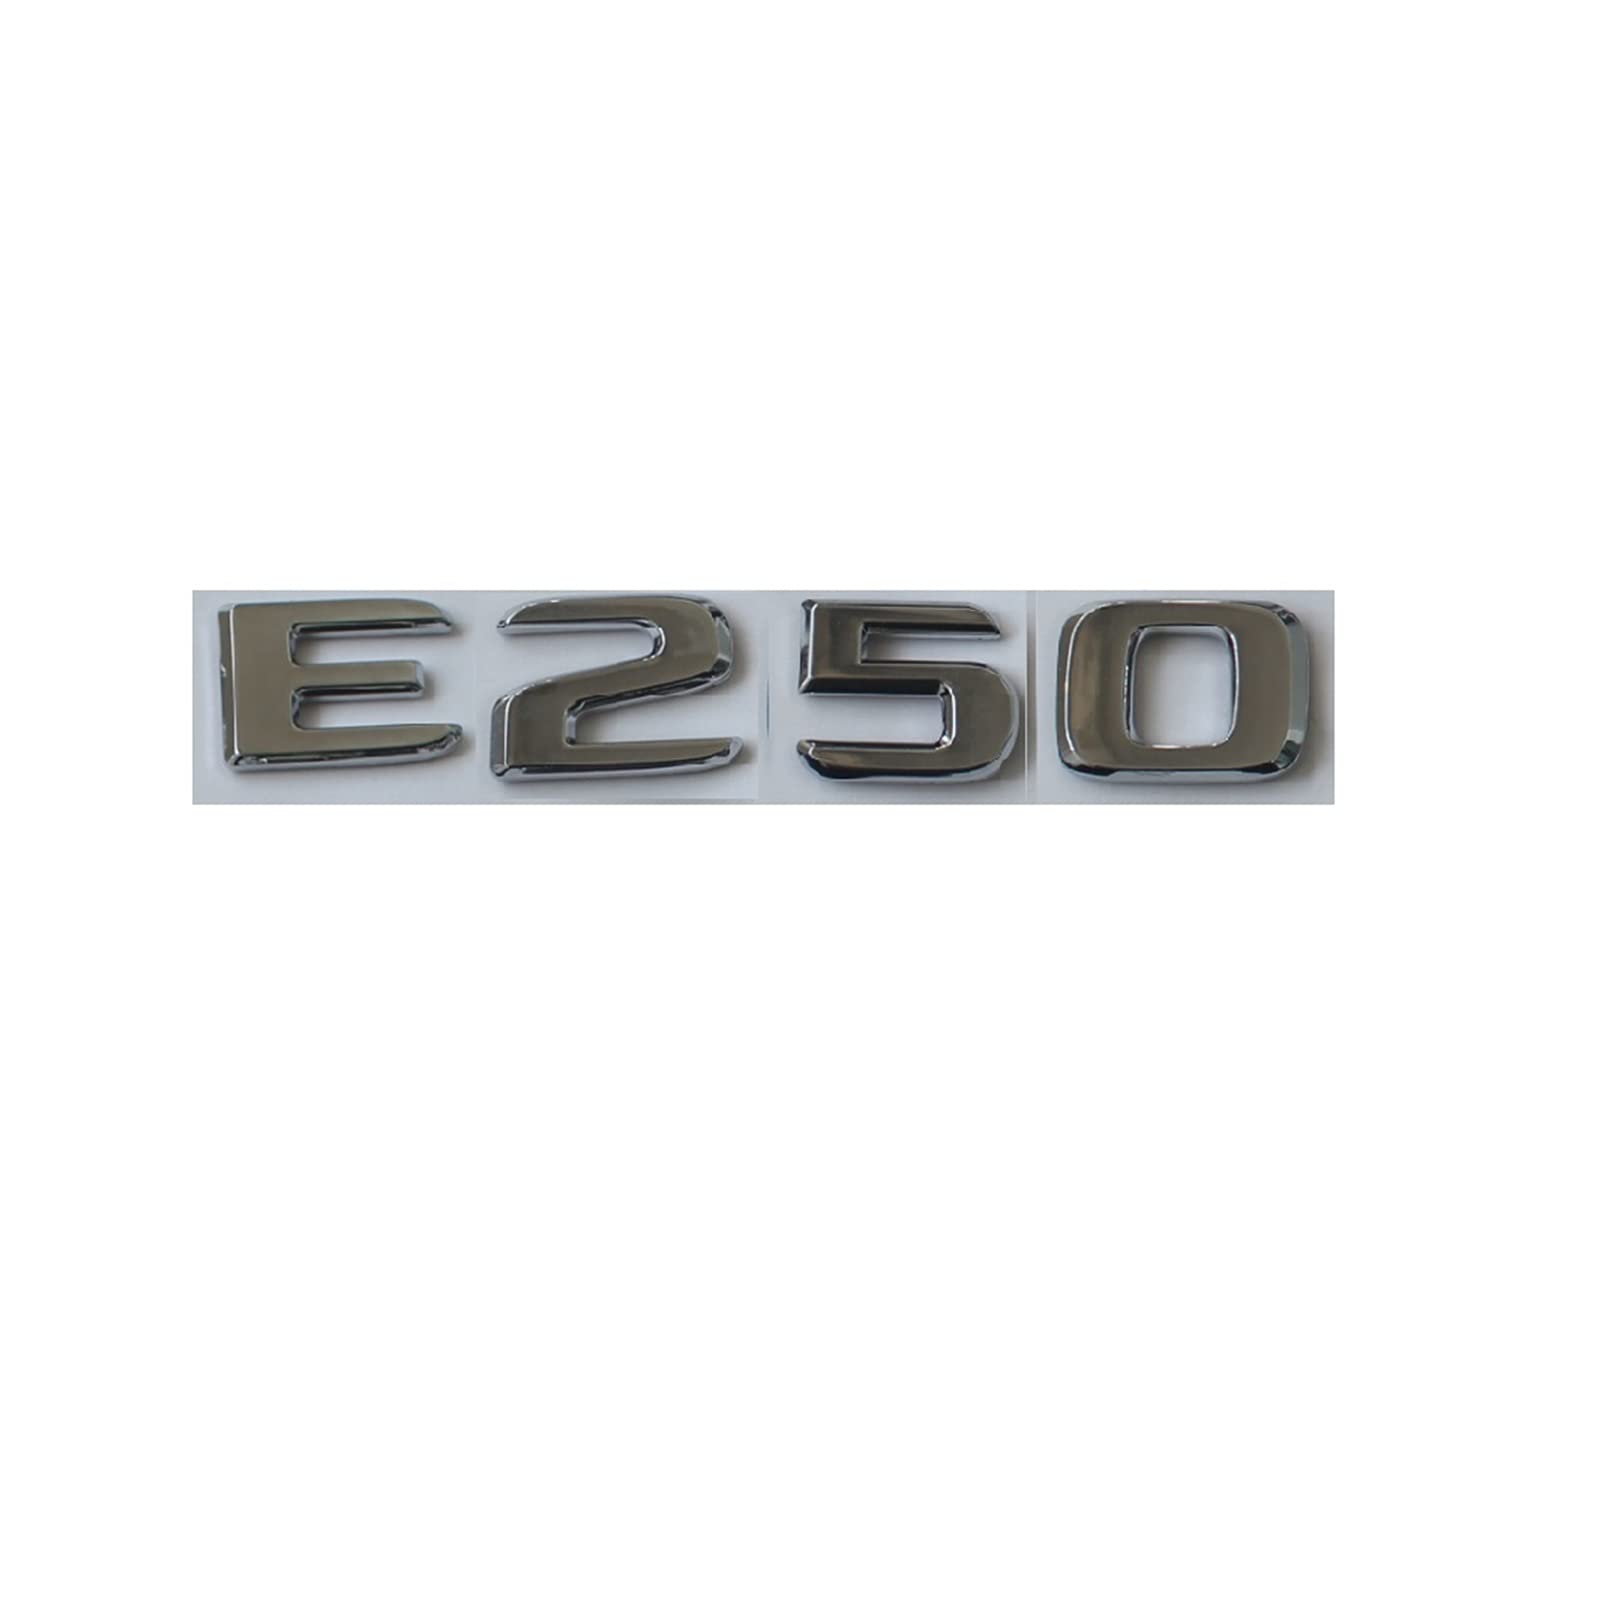 LHYFAGQK Flache Chrom-ABS-Buchstaben for den hinteren Kofferraumdeckel, Abzeichen, Embleme, Aufkleber, kompatibel mit Mercedes Benz E-Klasse W213 E250 2017–2020 Abzeichen Autoaufkleber von LHYFAGQK